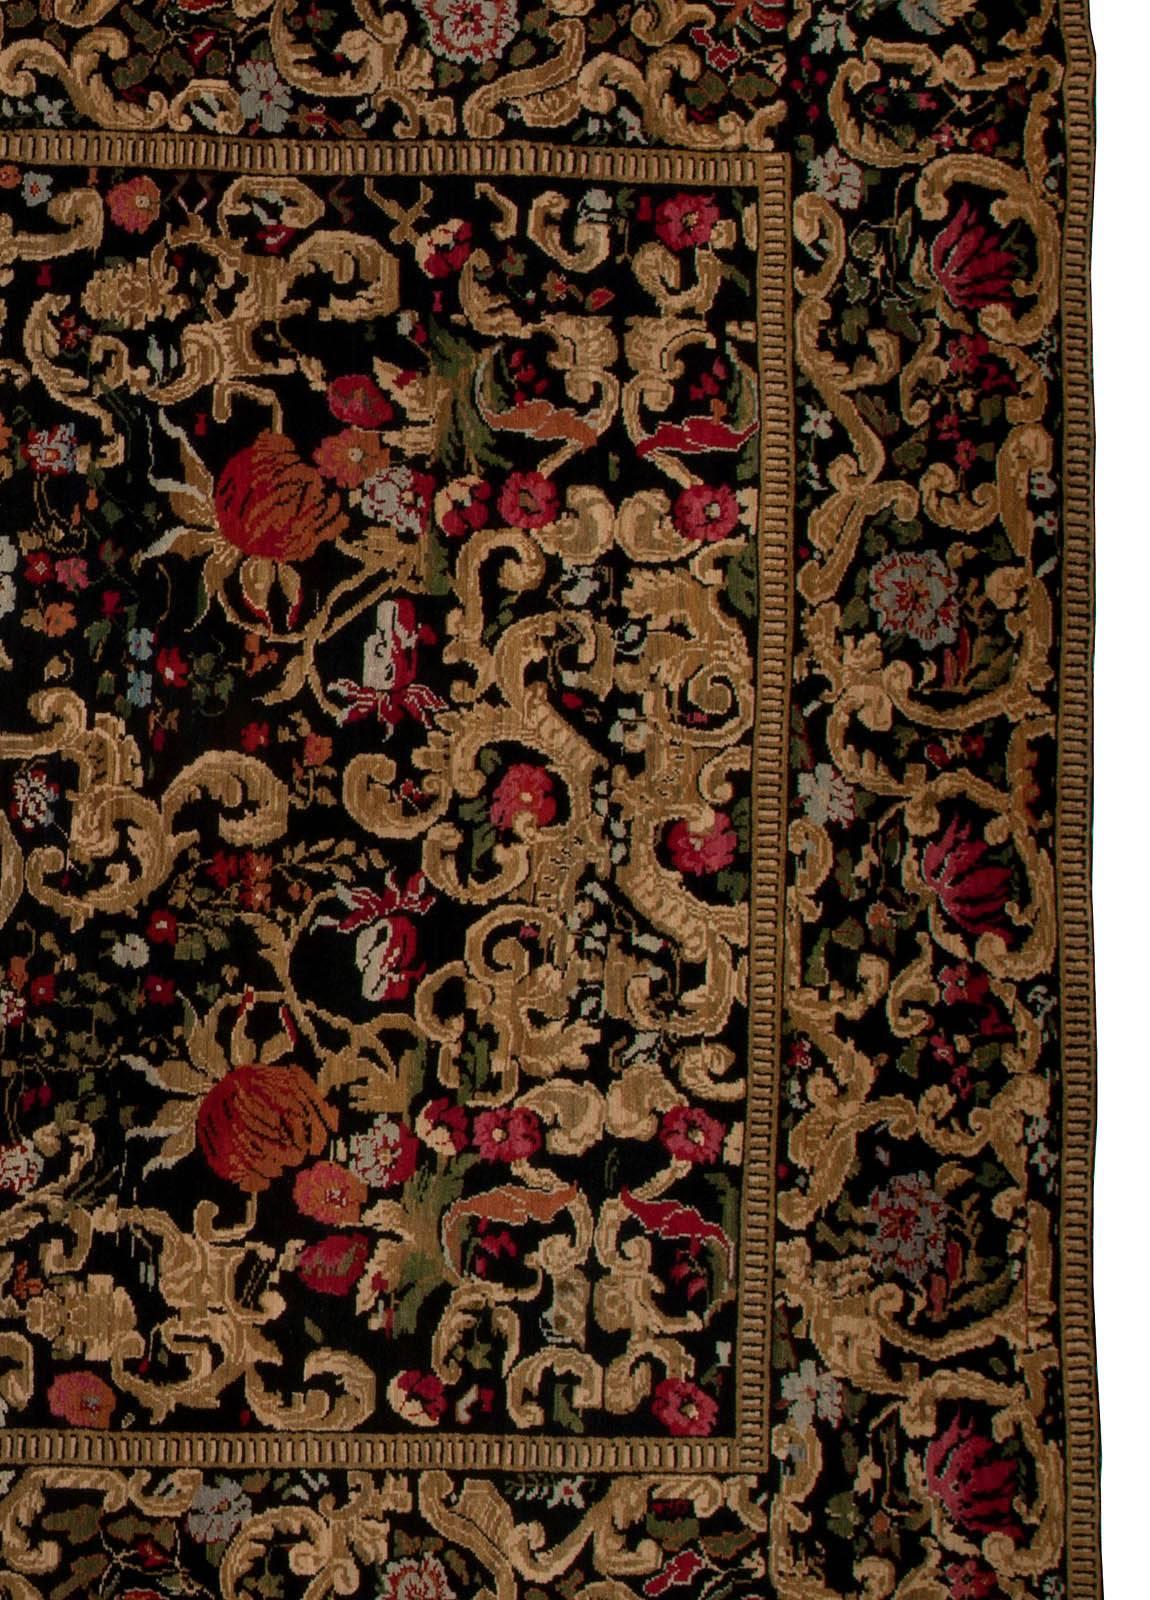 Russian 19th Century Karabagh Floral Design Handmade Rug For Sale